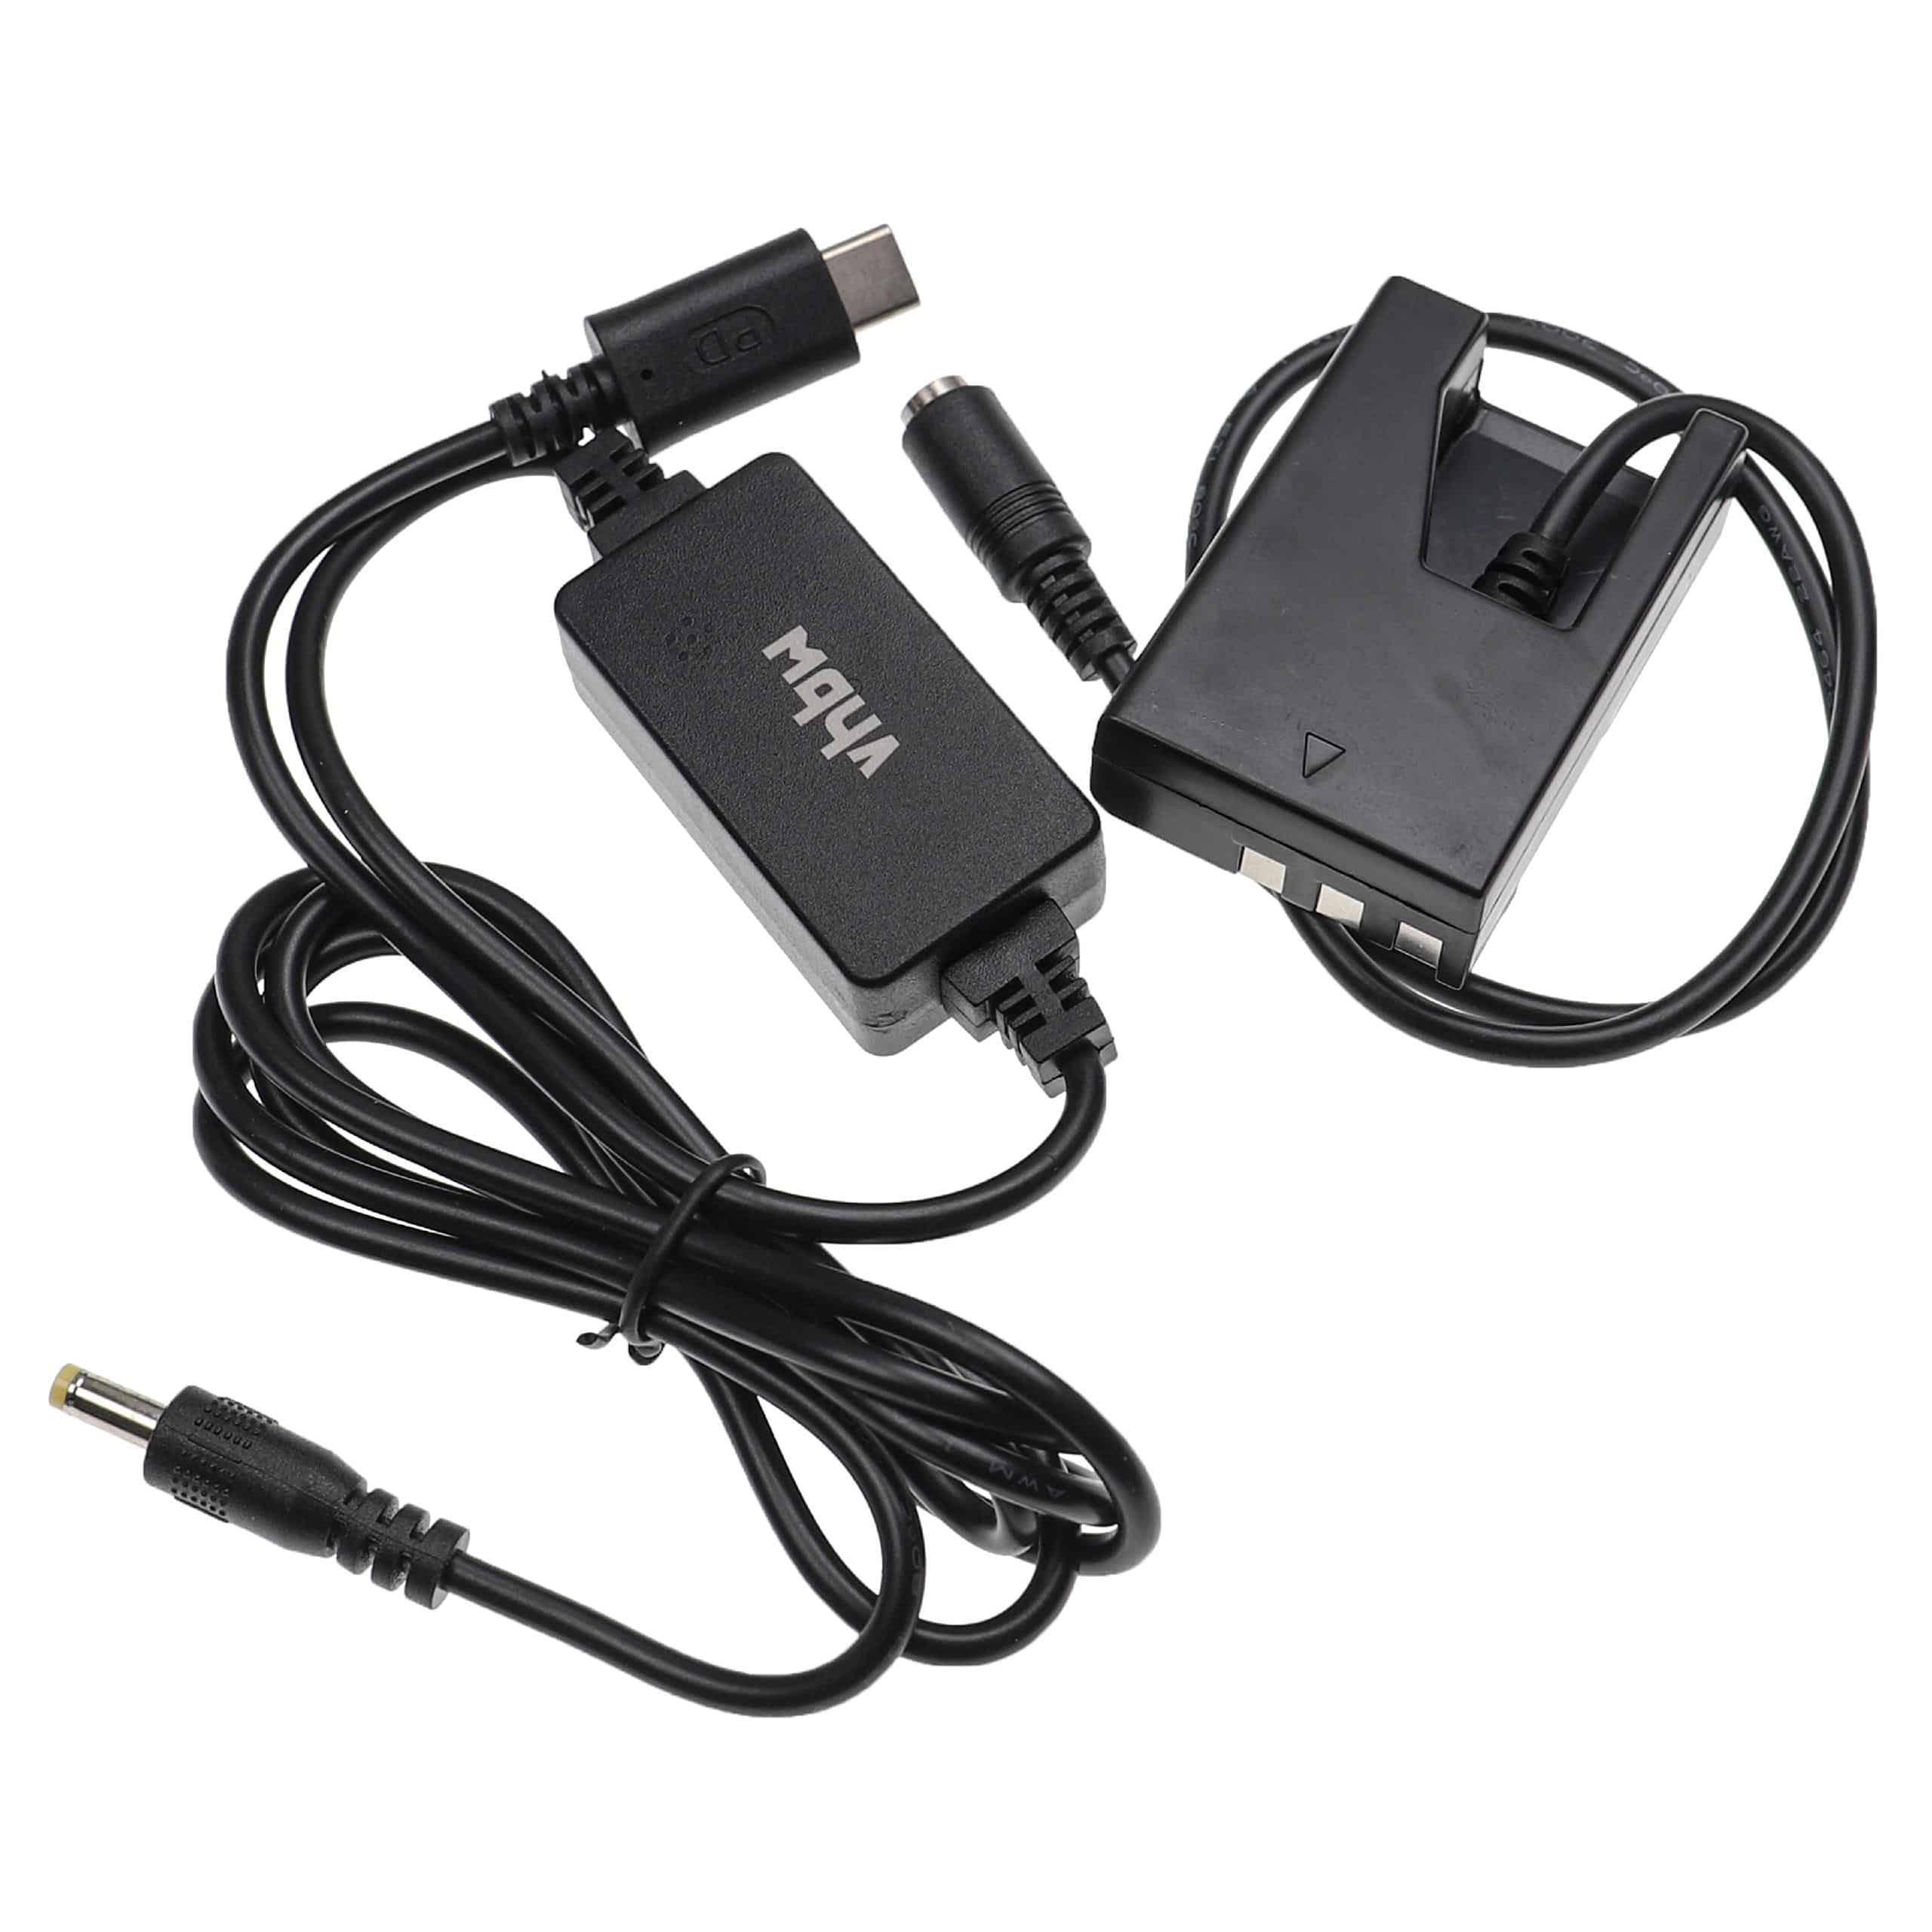 Zasilacz USB do aparatu zam. EH-5AEH-5 + adapter zam. Nikon EP-5 - 2 m, 9 V 3,0 A